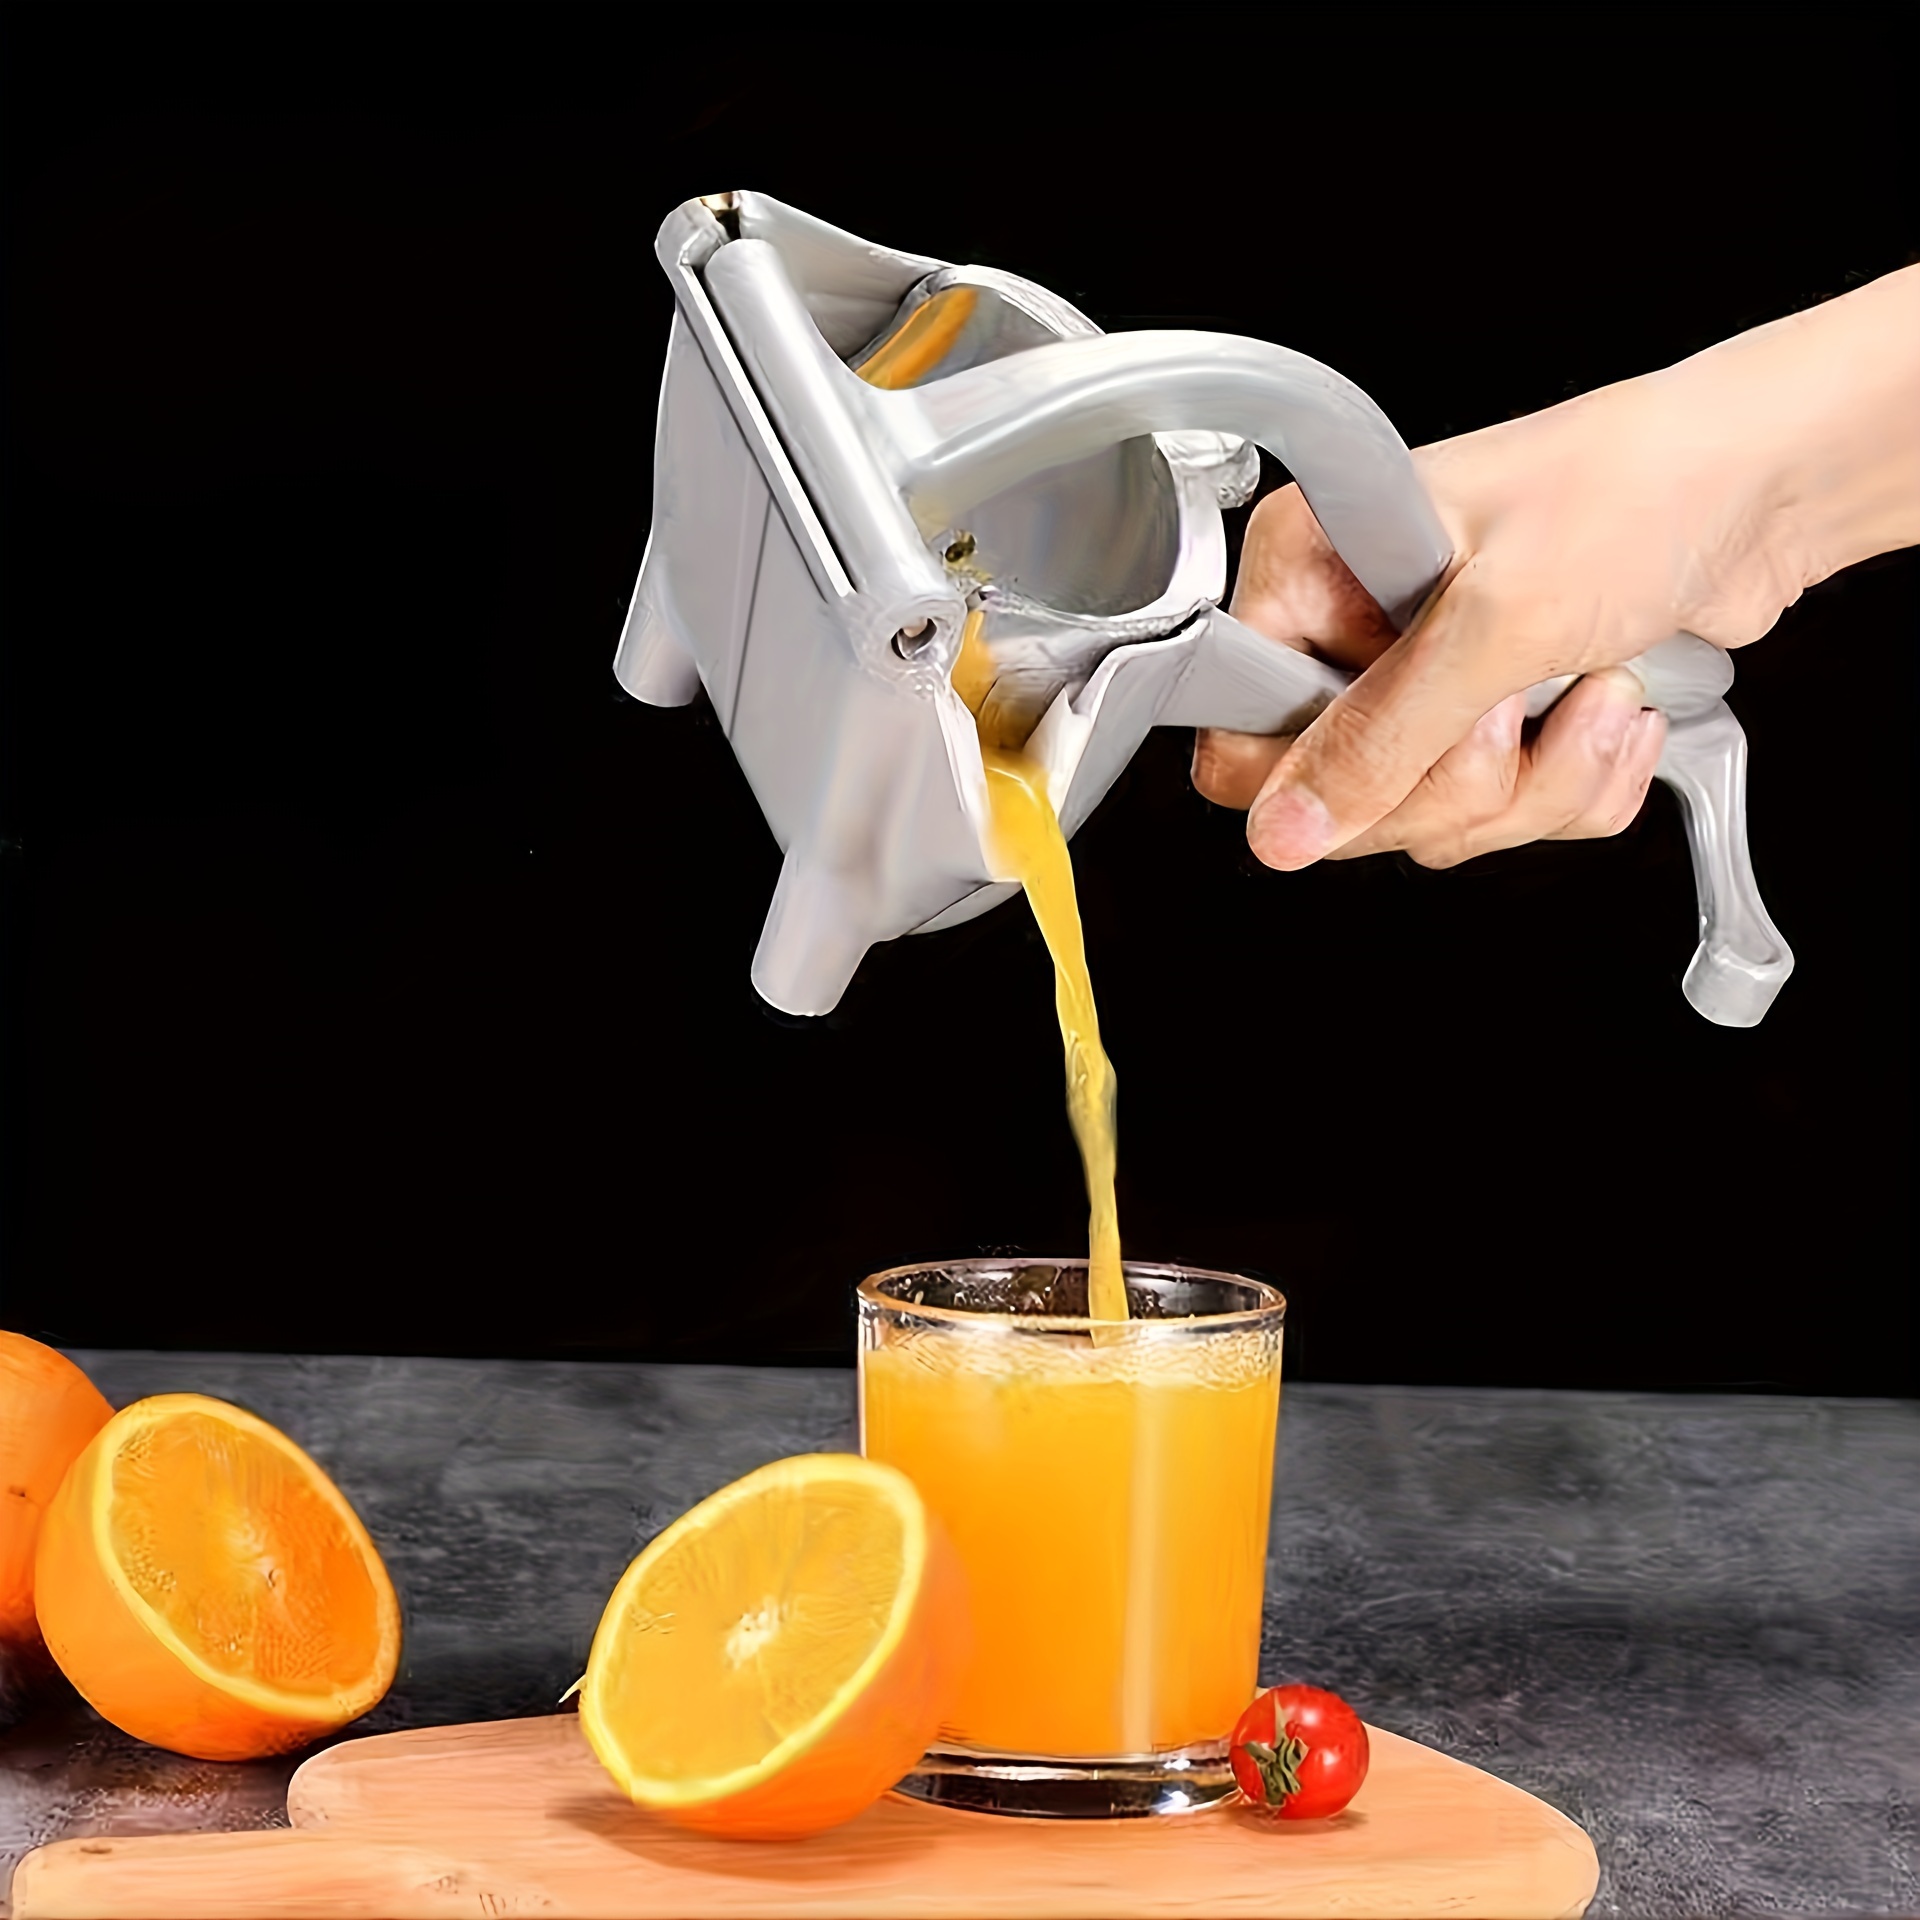 

Portable Handheld Citrus Fruit Press Juicer With Filter, Manual Fruit Juicer Lemon Orange Squeezer Extractor Squeezing Tool, For Restaurant Use